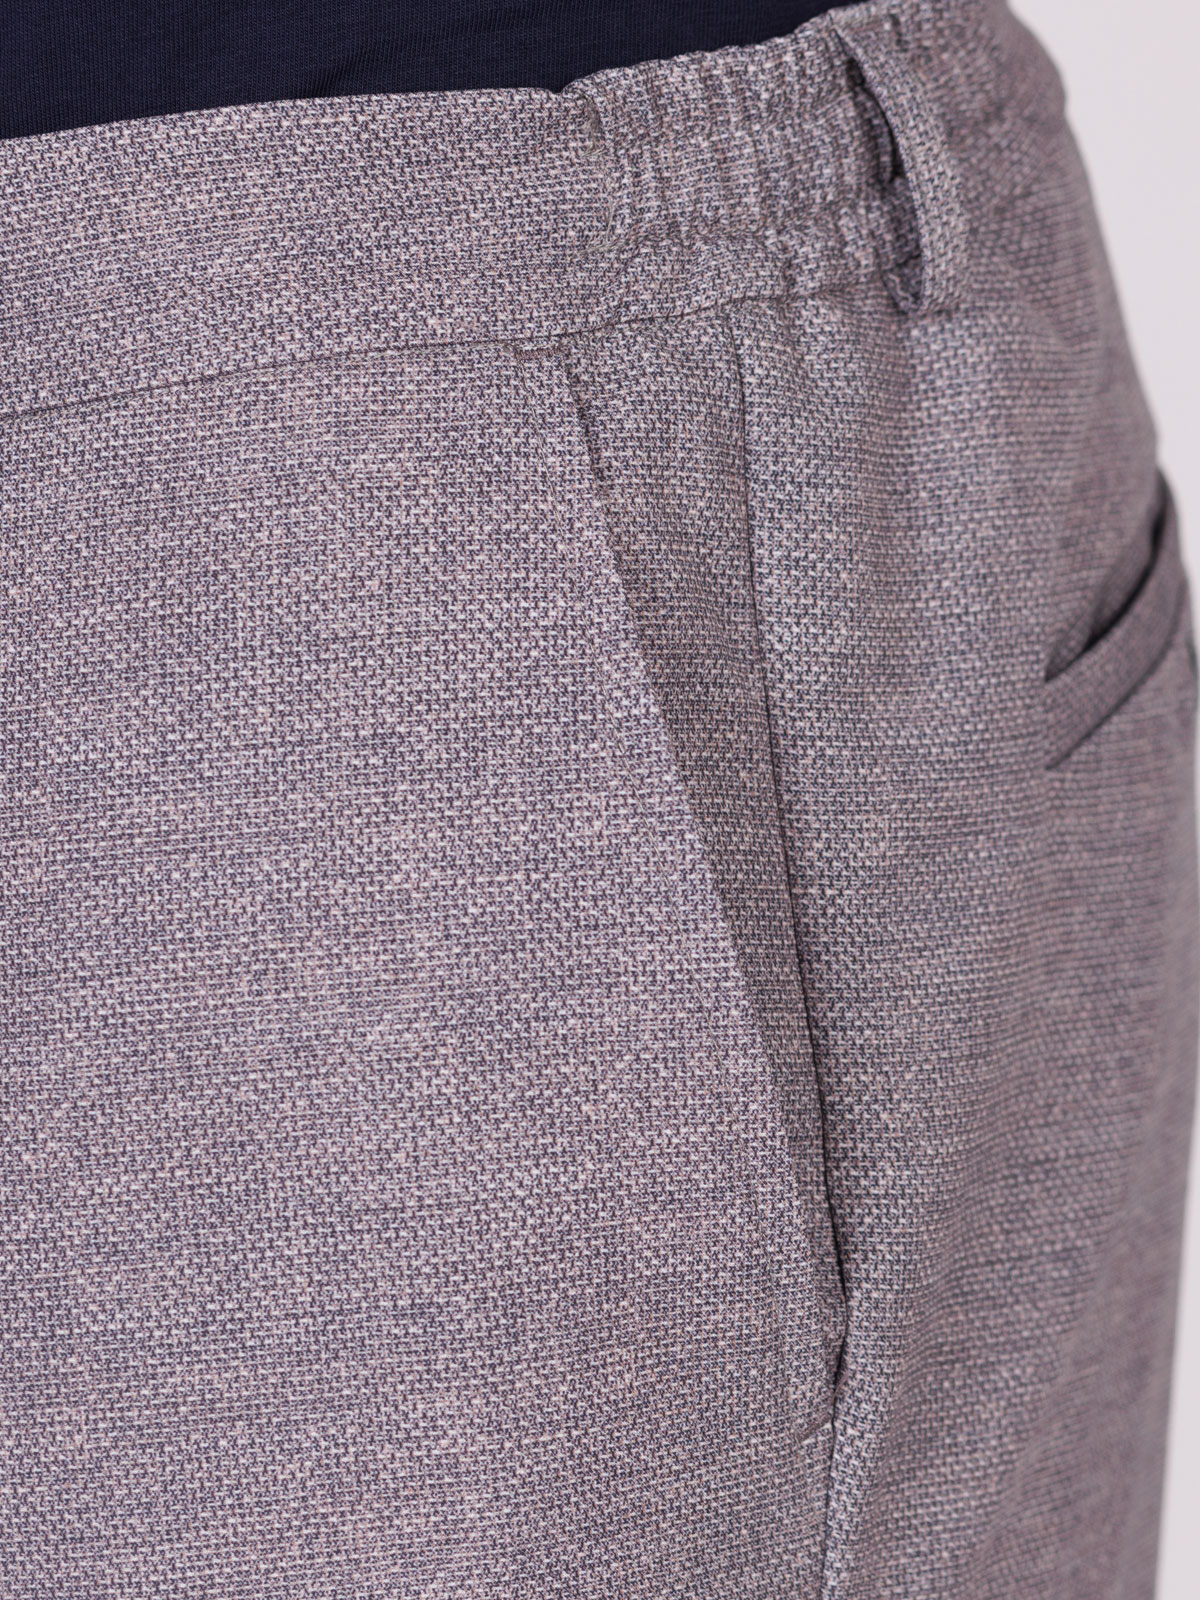 Pantaloni pentru bărbați în bej melange - 29008 € 55.12 img3